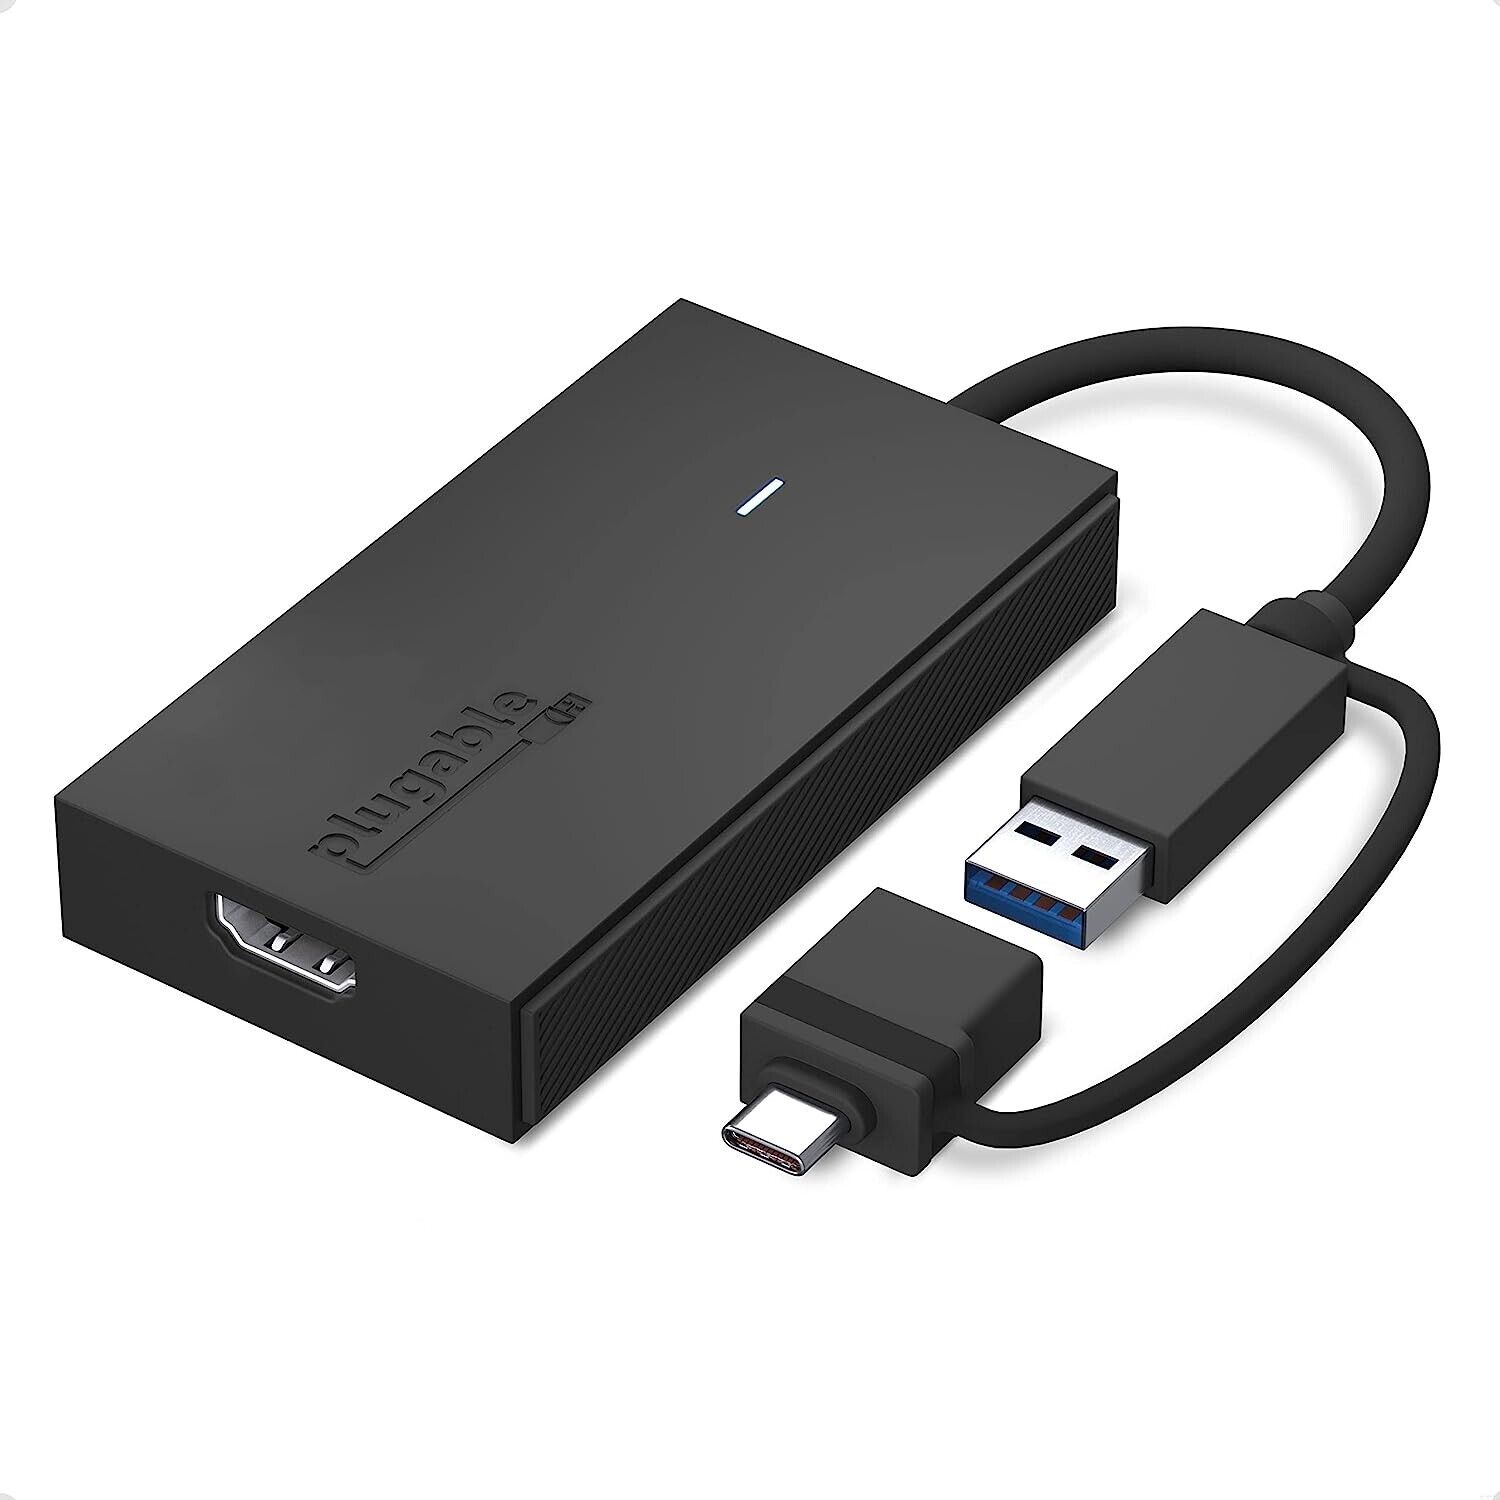 Plugable USB-C/USB 3.0 to HDMI Adapter for Mac, Windows, ChromeOS DisplayLink